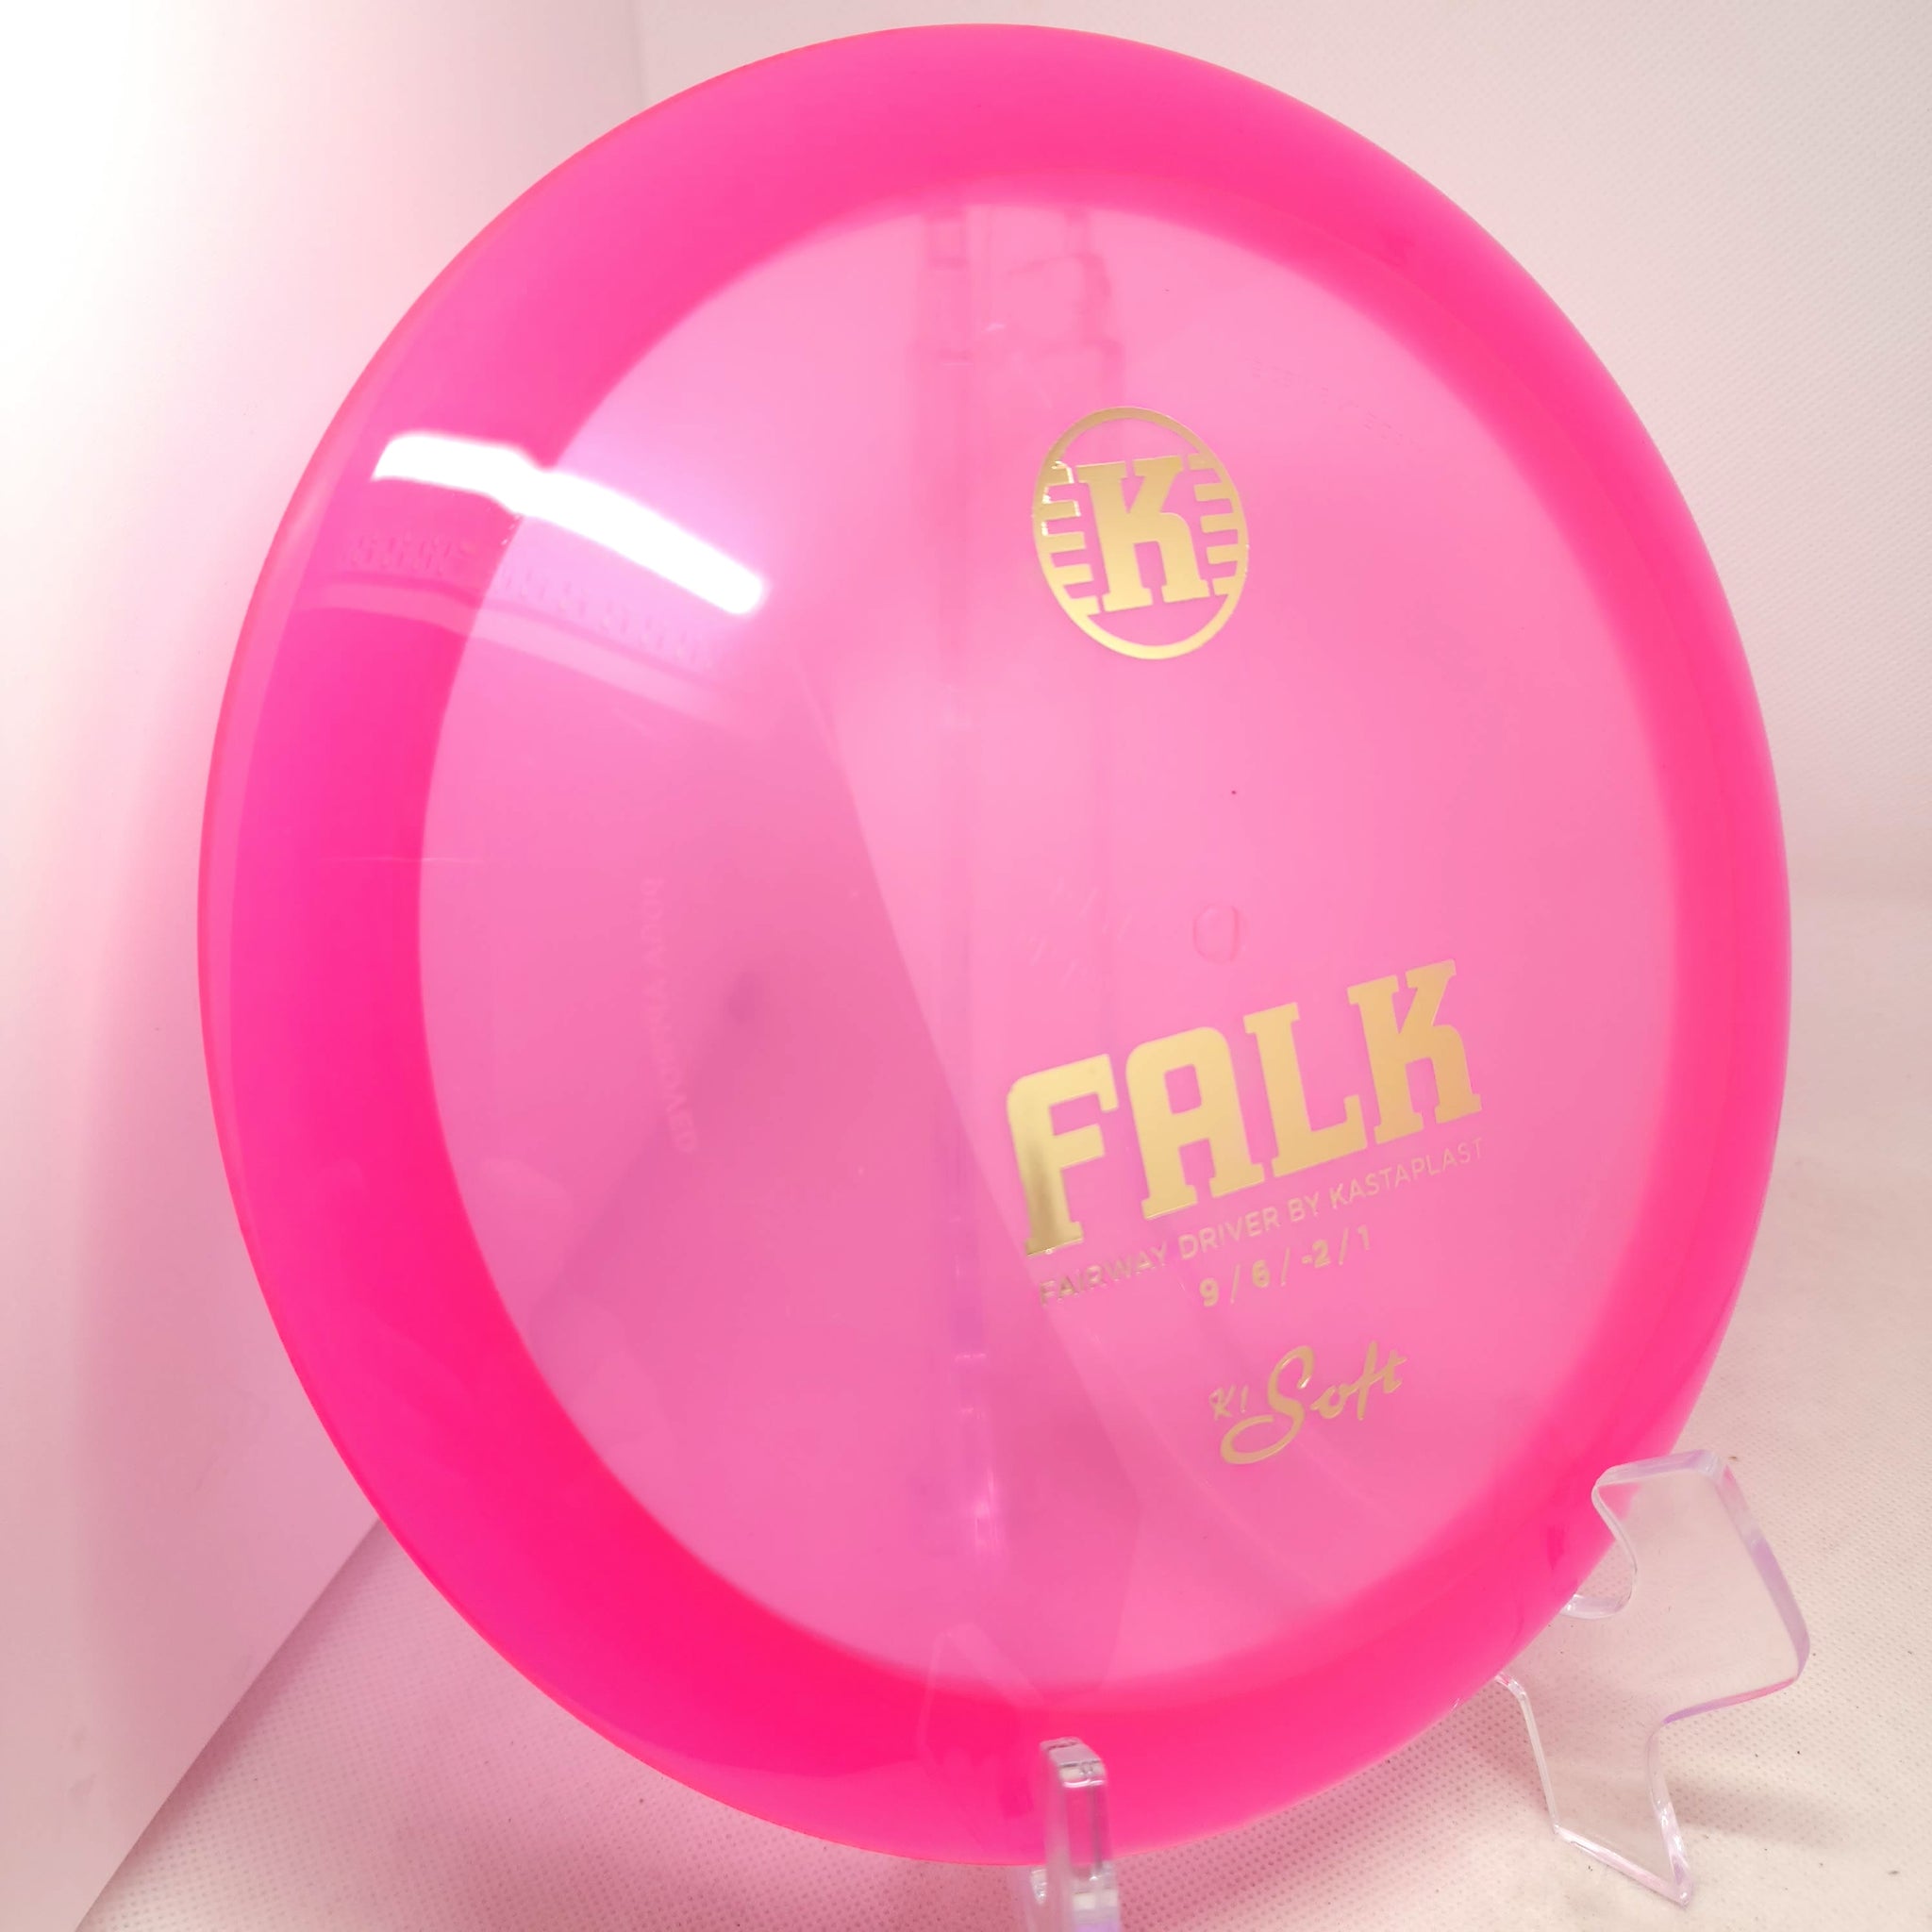 Falk (K1 Line)